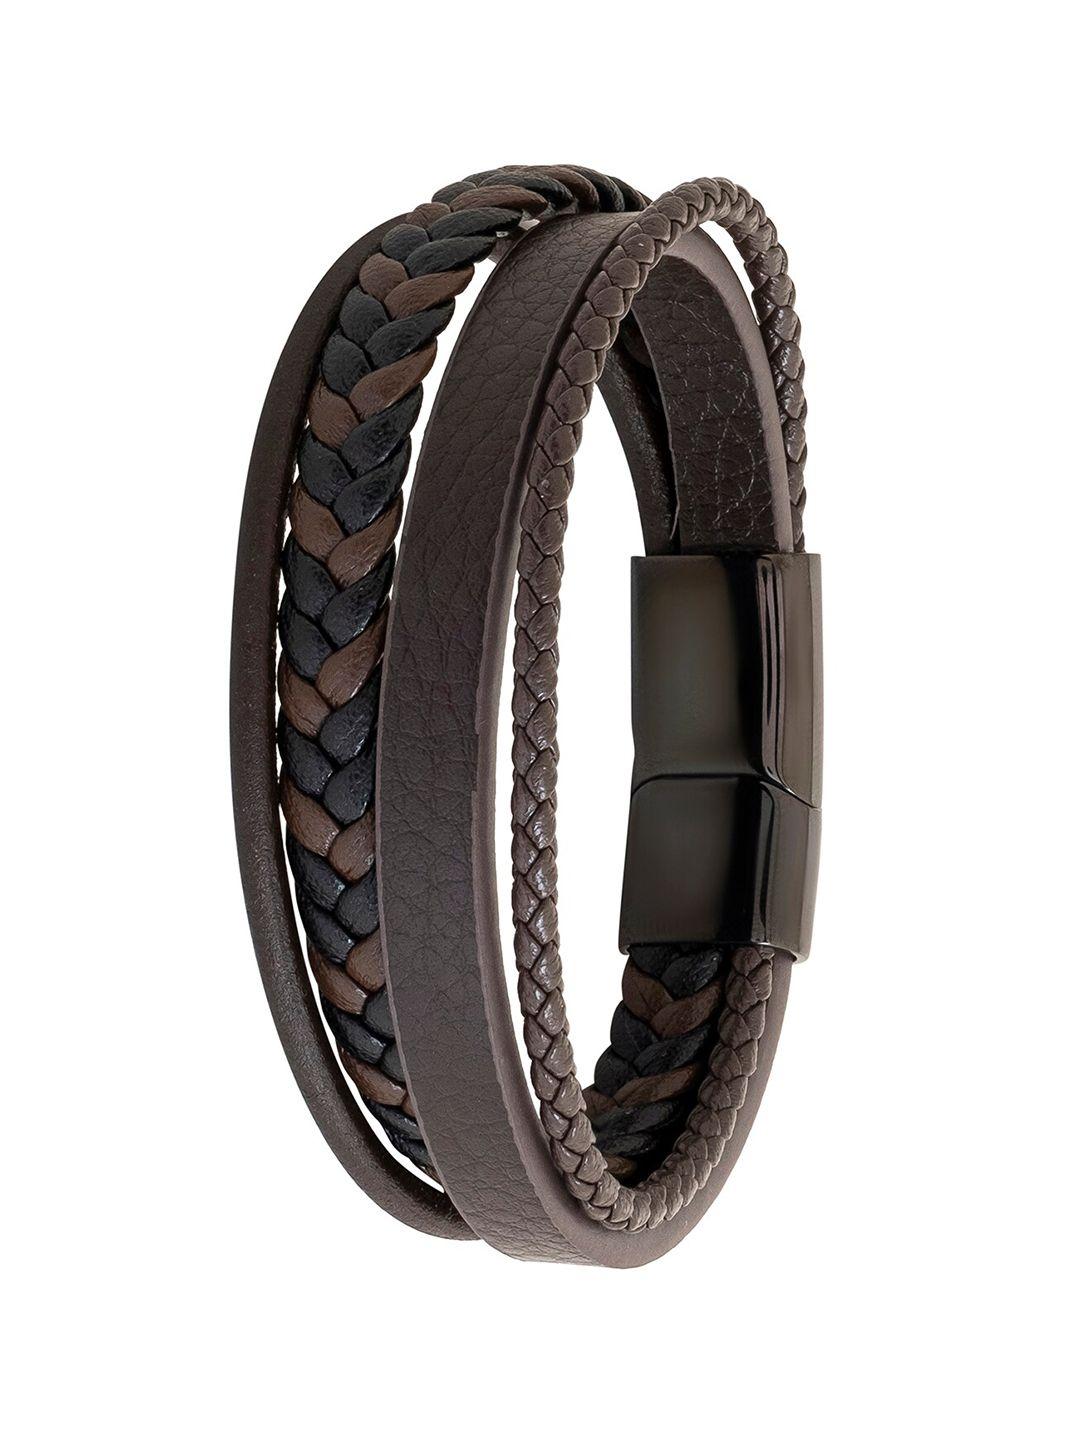 bodha leather multistrand bracelet